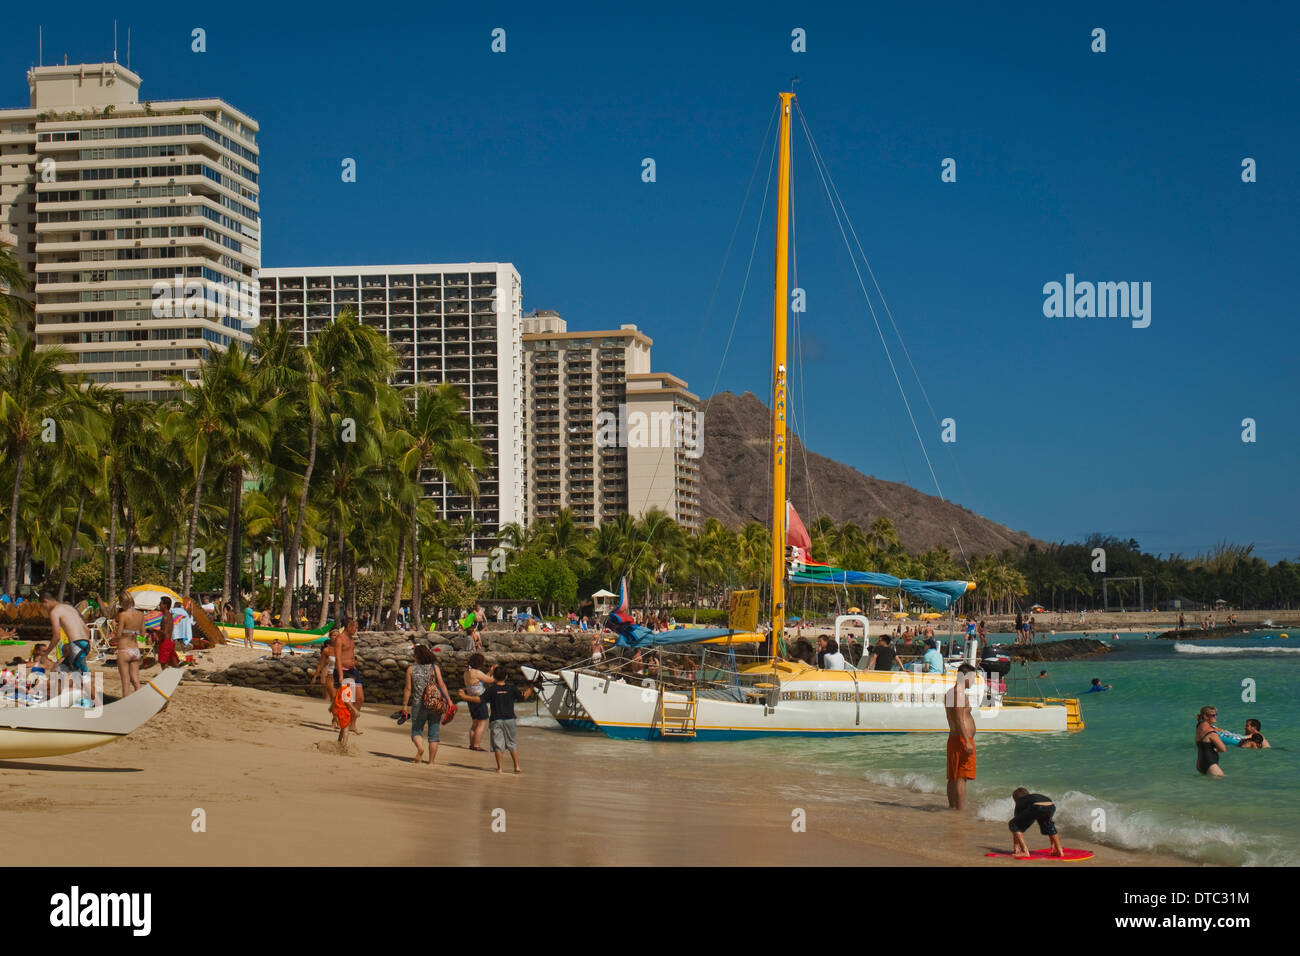 La gente sulla sabbia presso la spiaggia di Waikiki, Honolulu Oahu, Hawaii Foto Stock